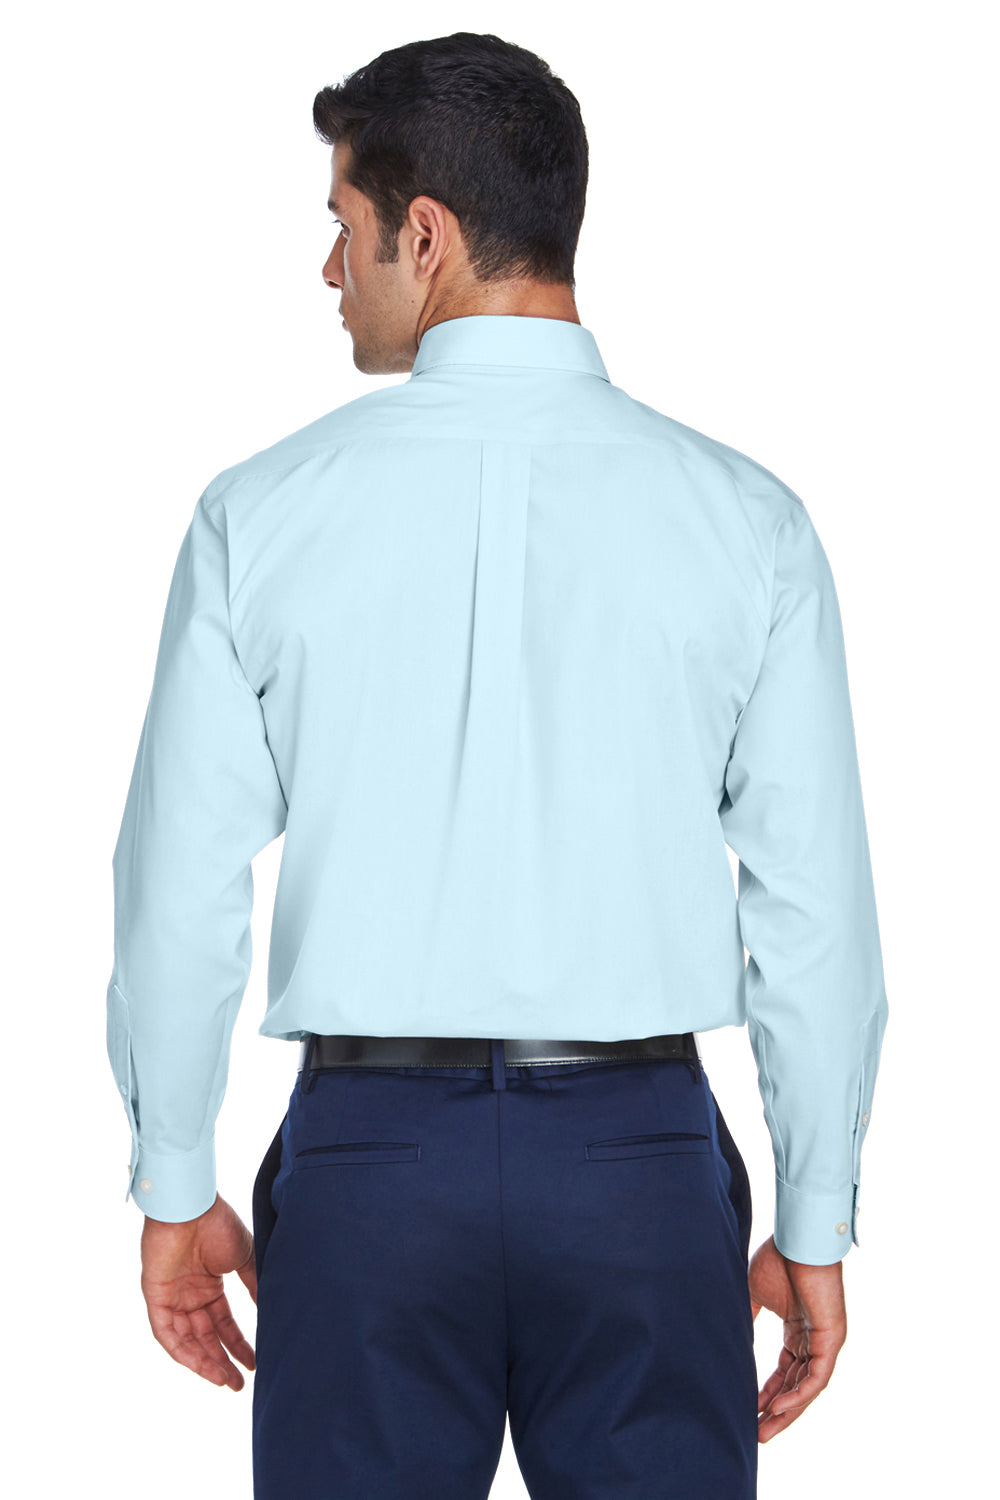 Devon & Jones D620 Mens Crown Woven Collection Wrinkle Resistant Long Sleeve Button Down Shirt w/ Pocket Crystal Blue Back